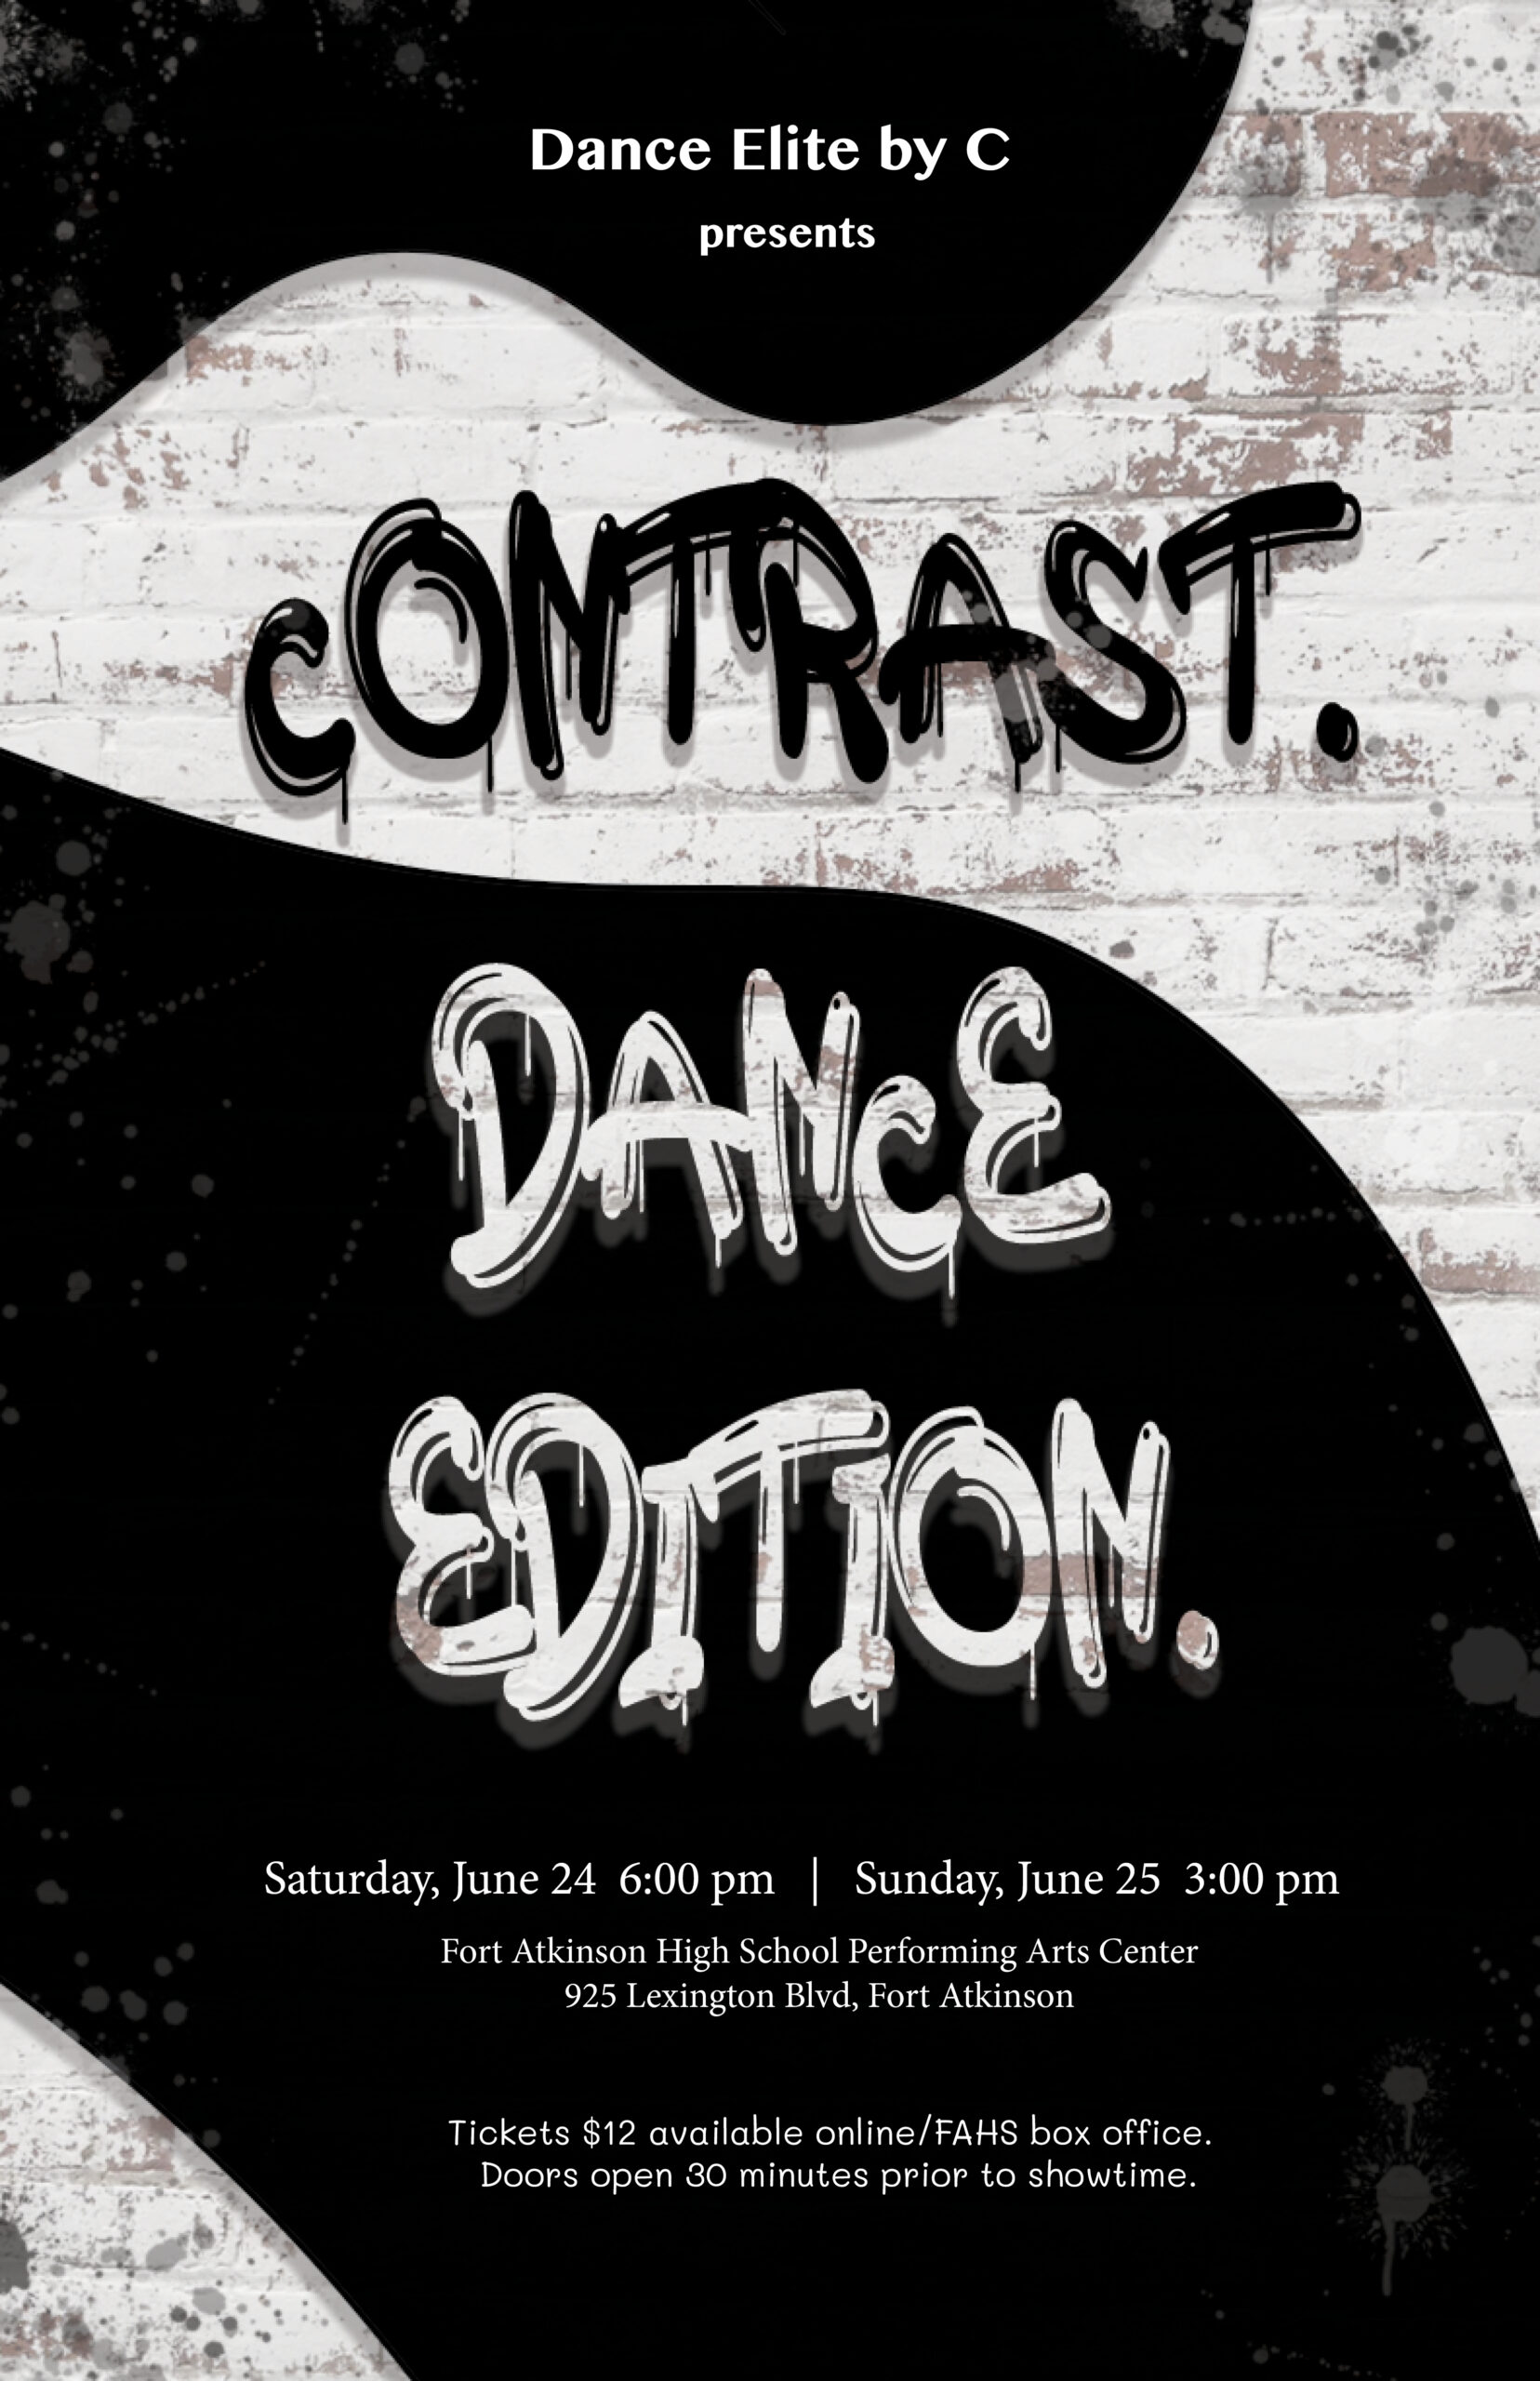 Dance Elite by C: Contrast. Dance Edition